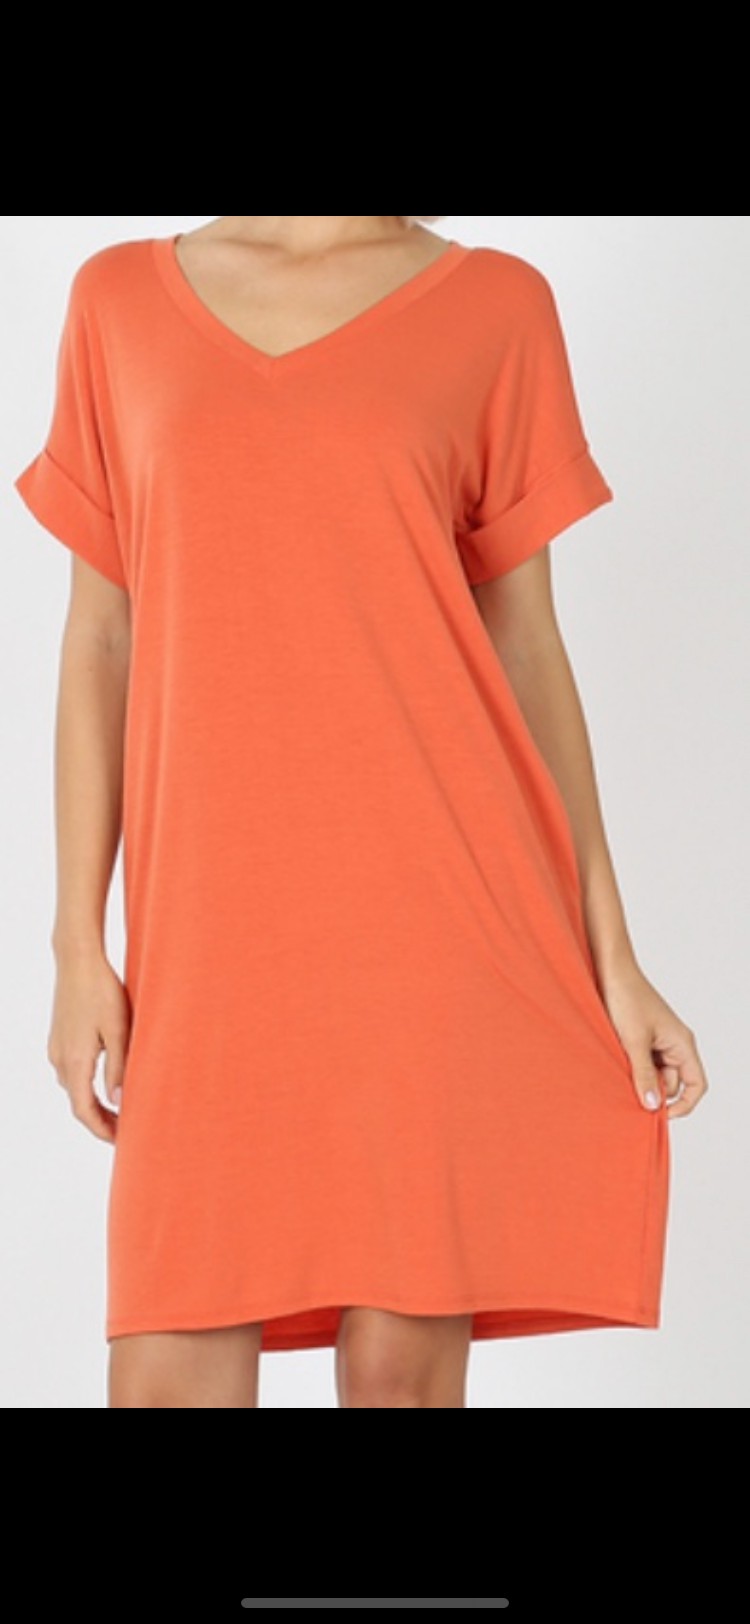 plus size orange t shirt dress